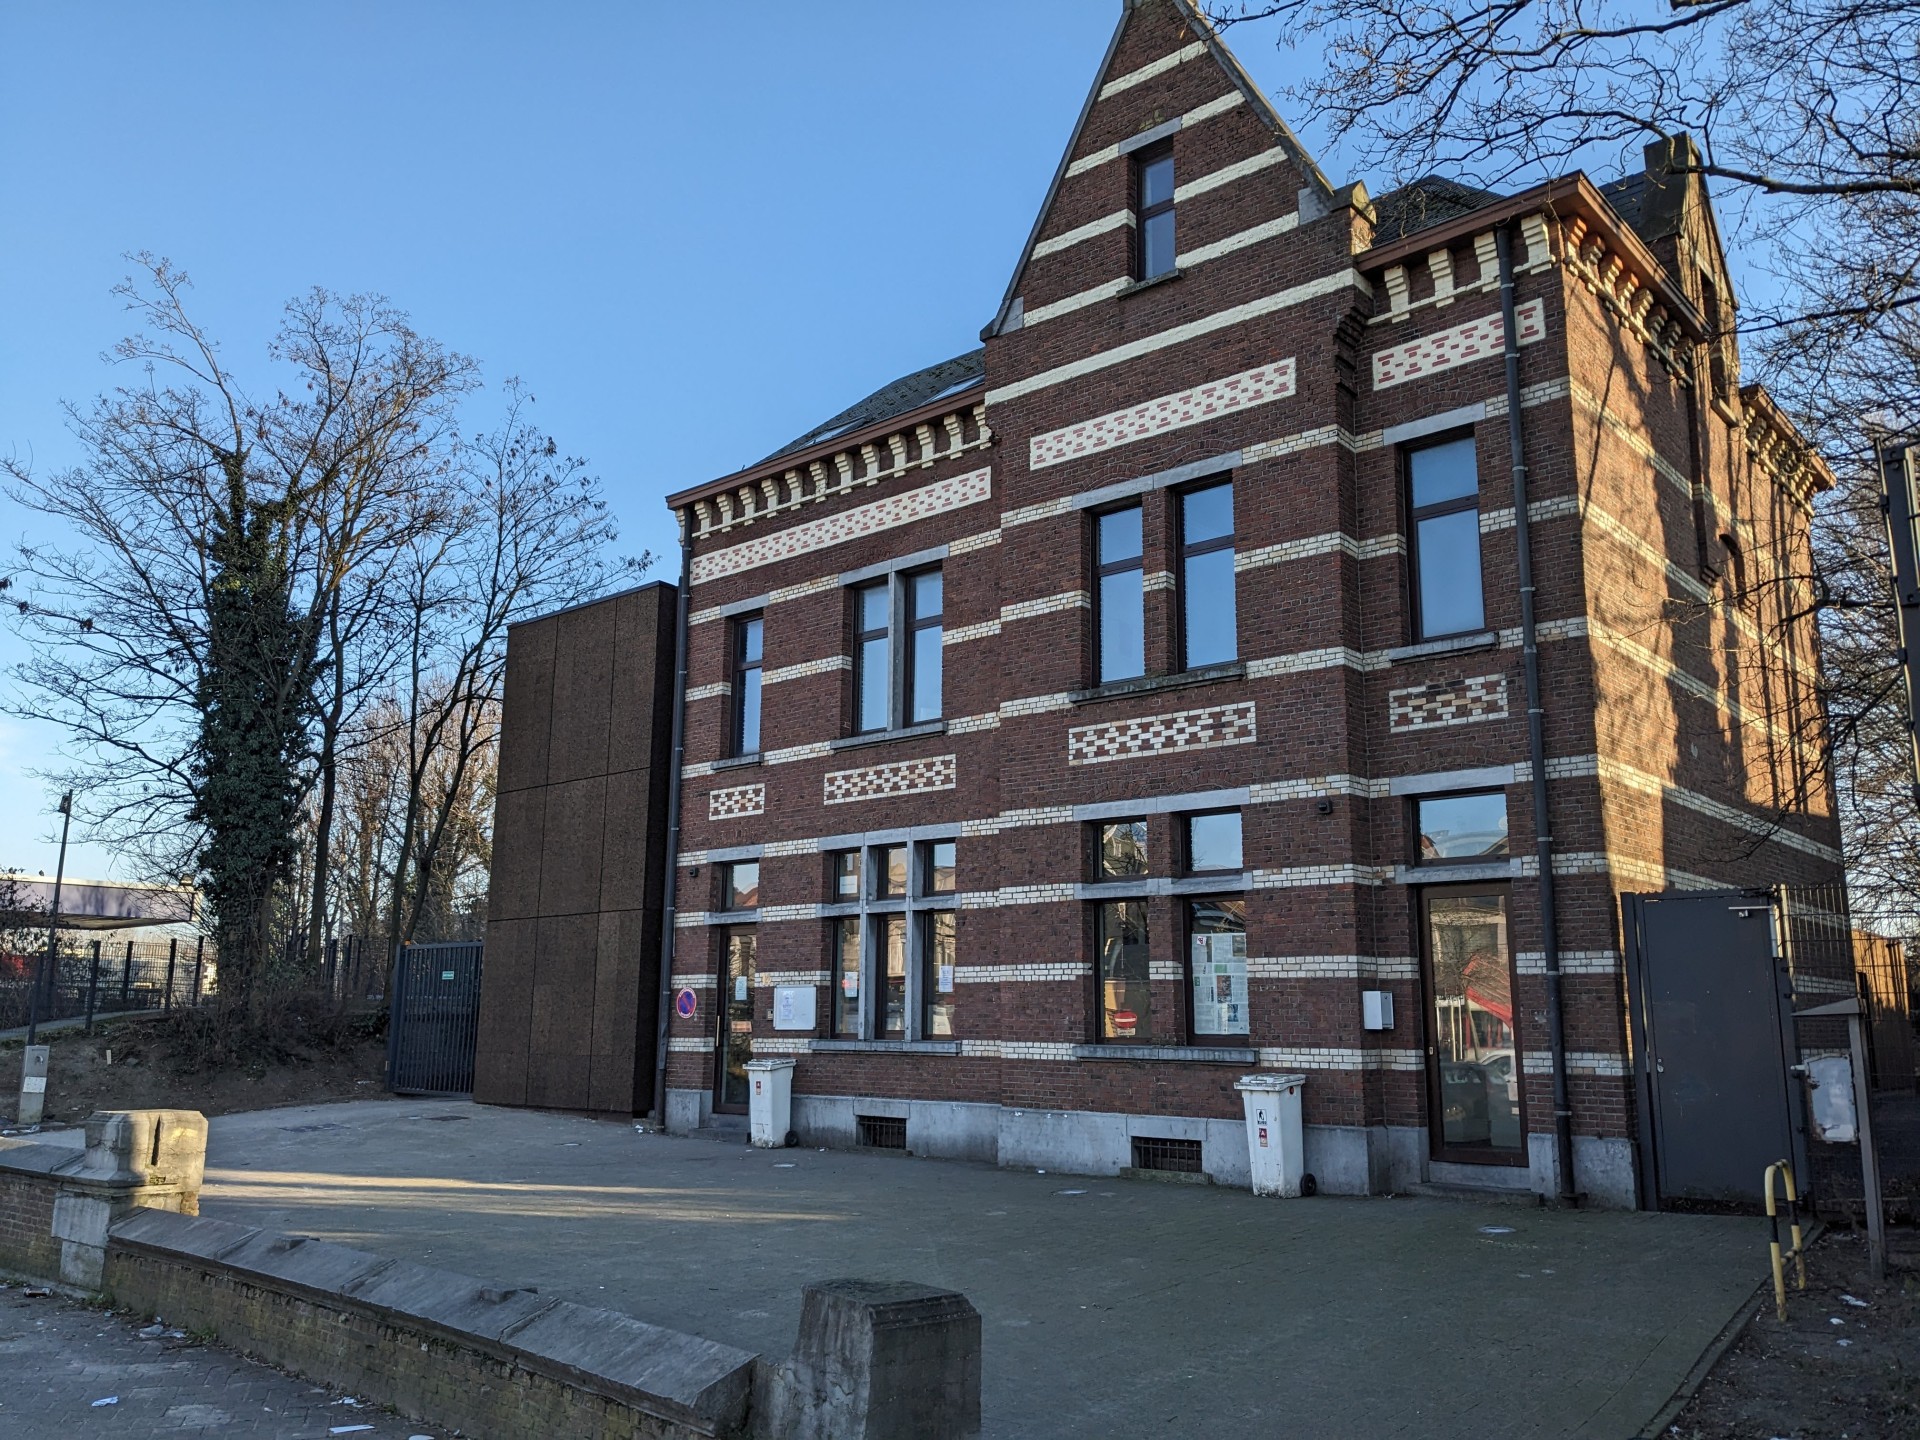 Gevel Free Clinic in Antwerpen-Noord